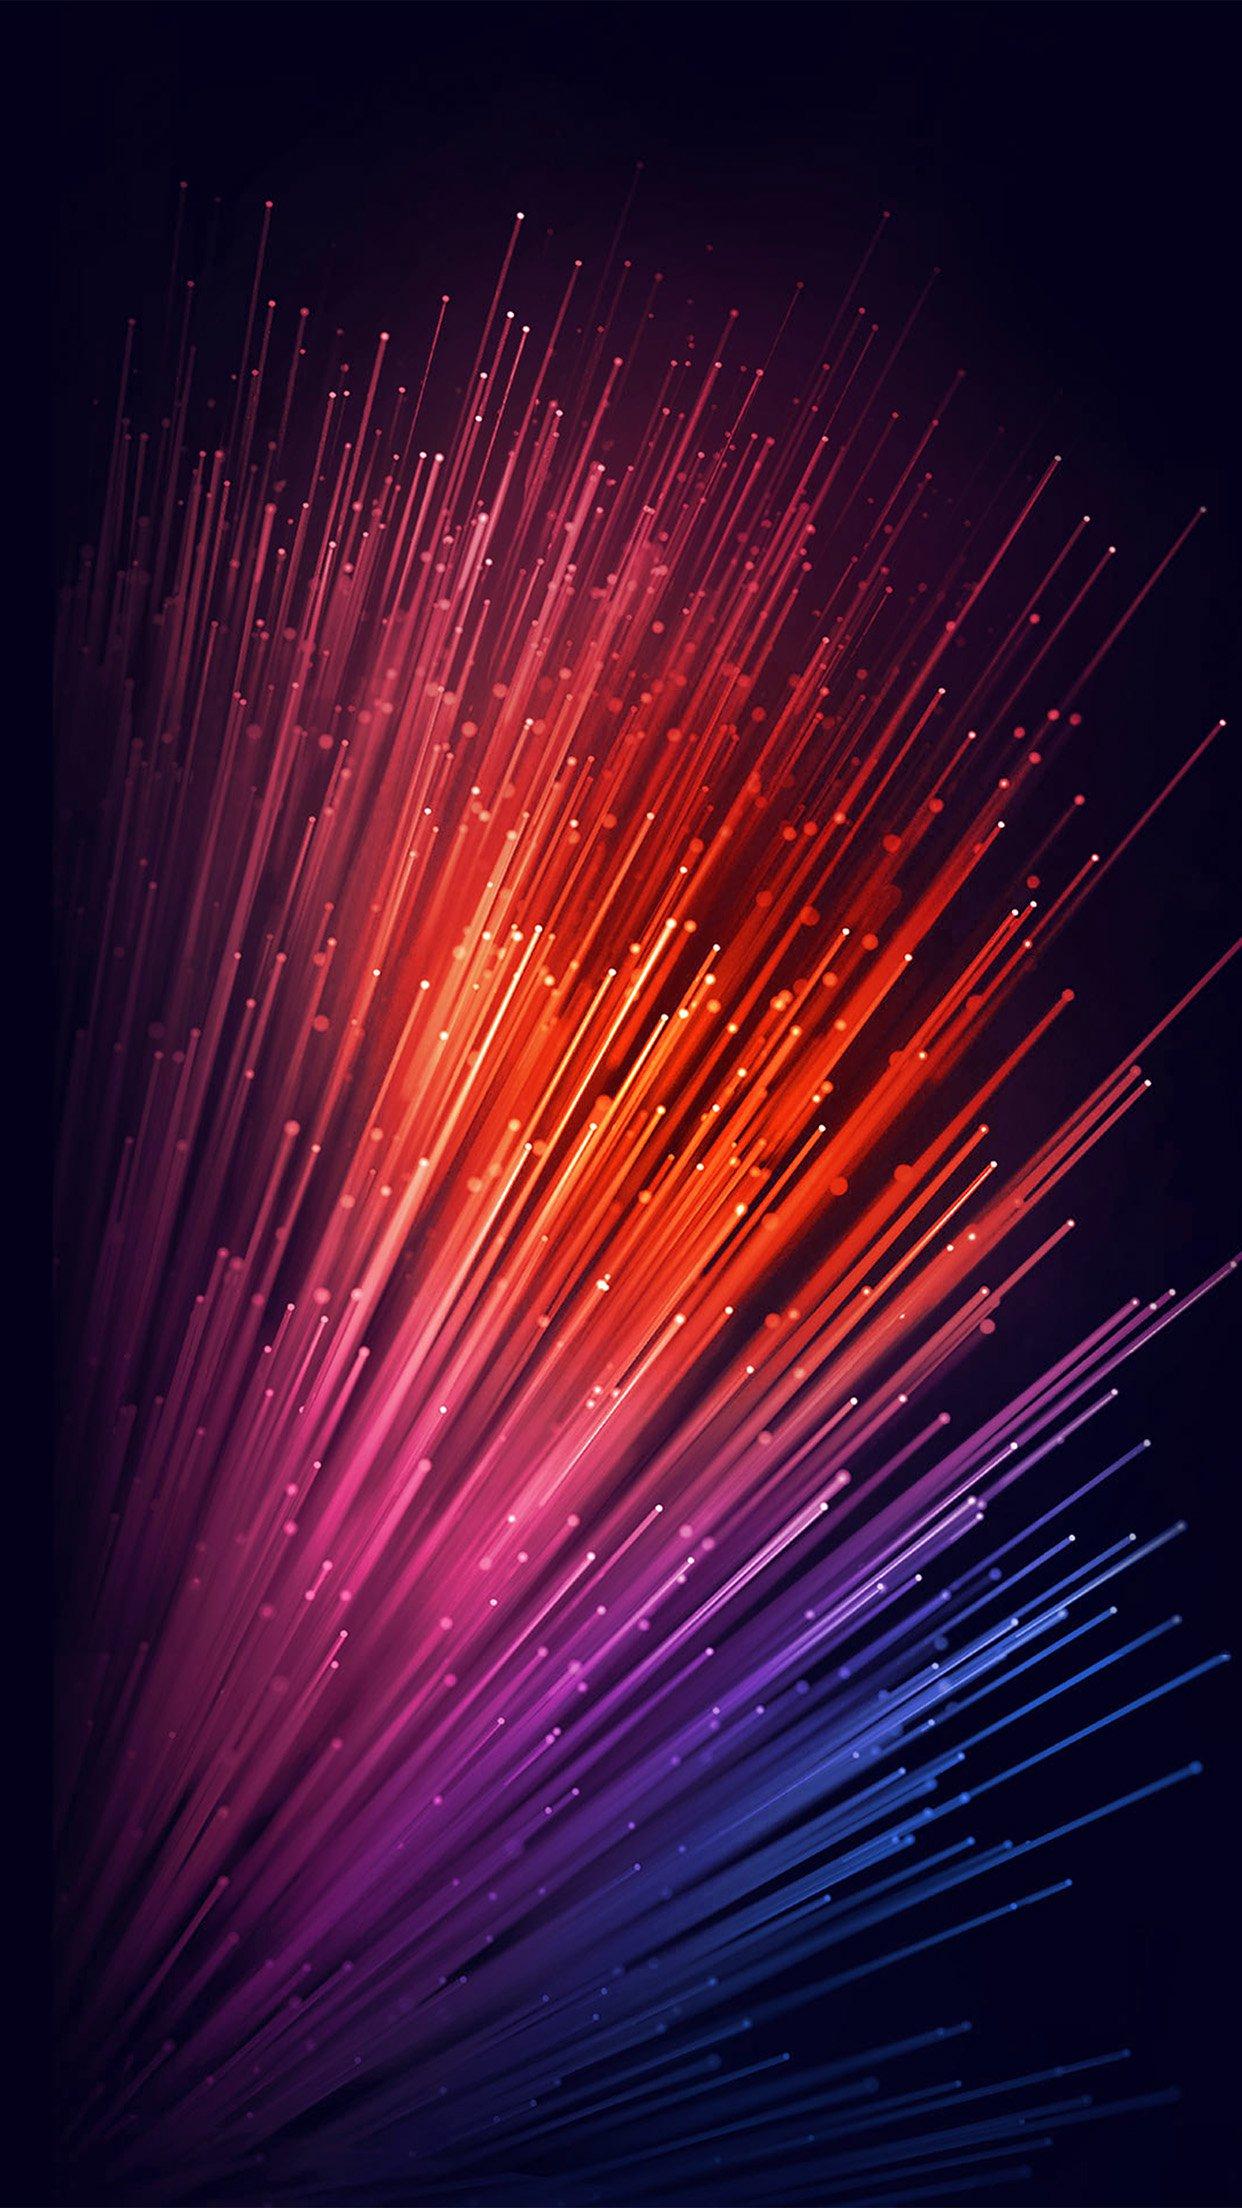 iPhone wallpaper. simple rainbow